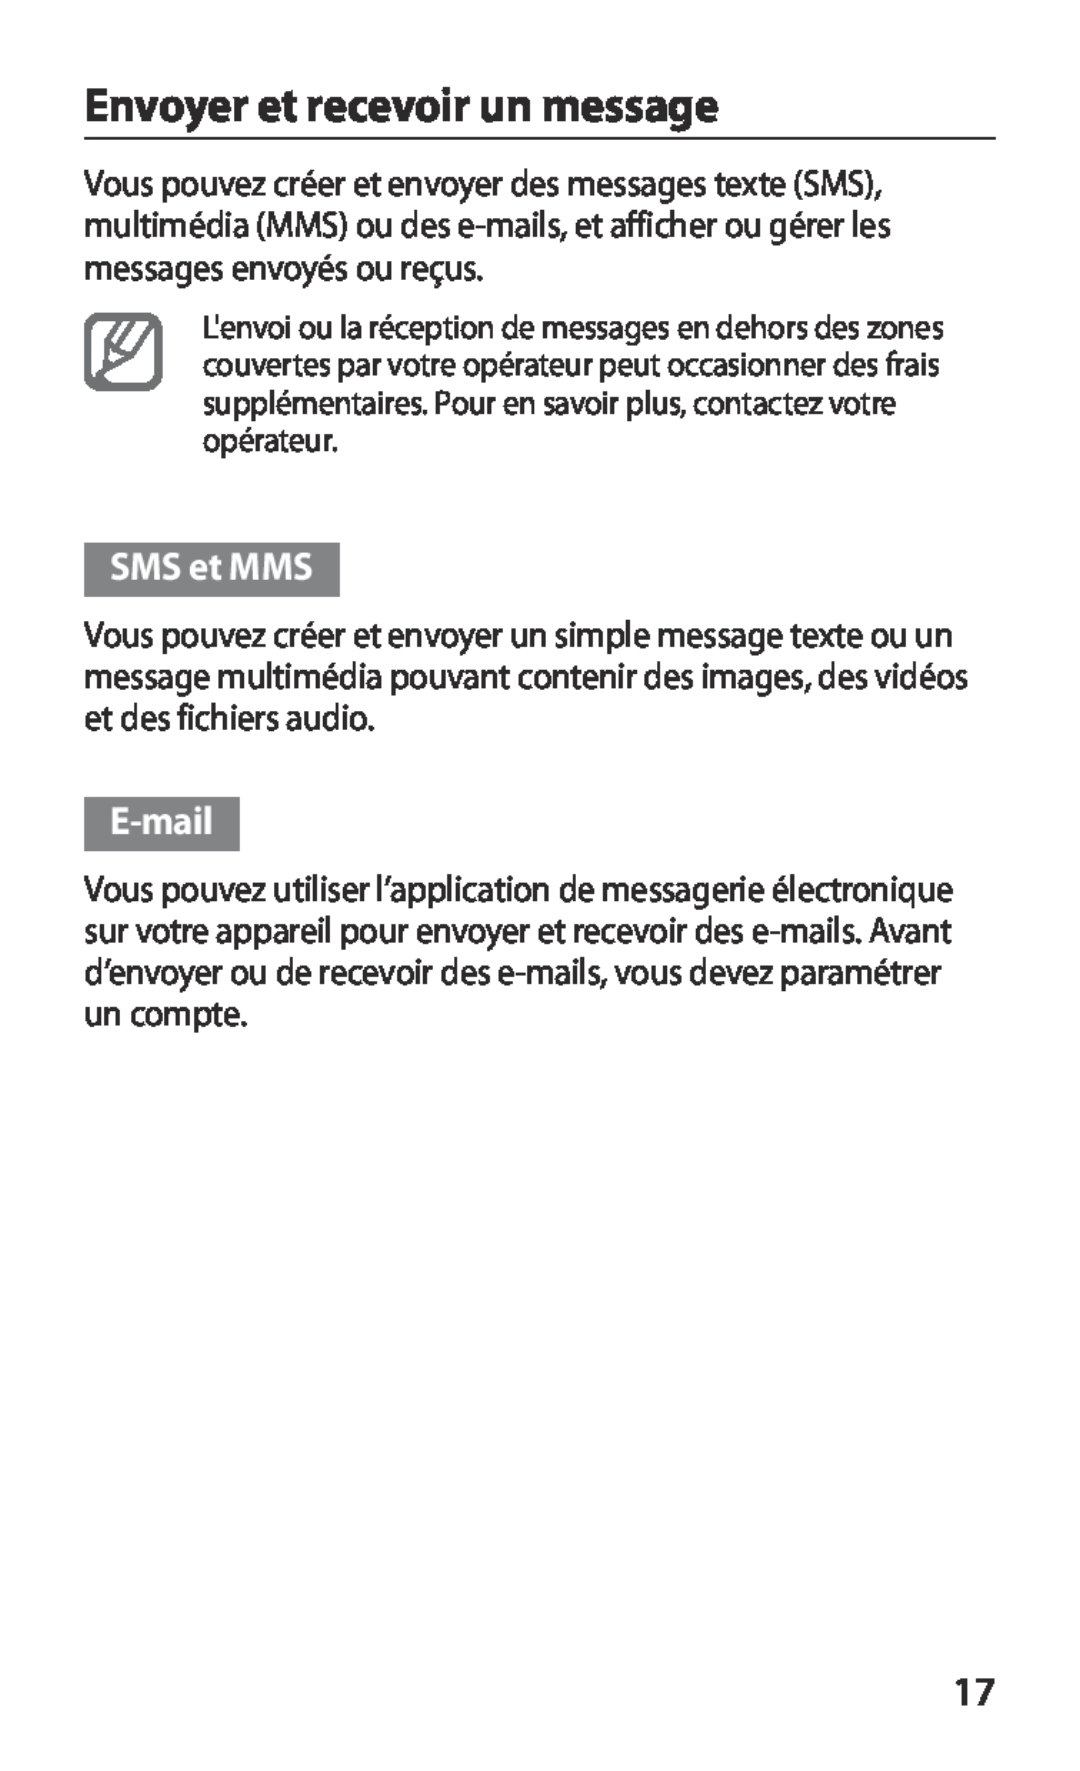 Samsung GT-S7530EAAXEF manual Envoyer et recevoir un message, SMS et MMS, E-mail 